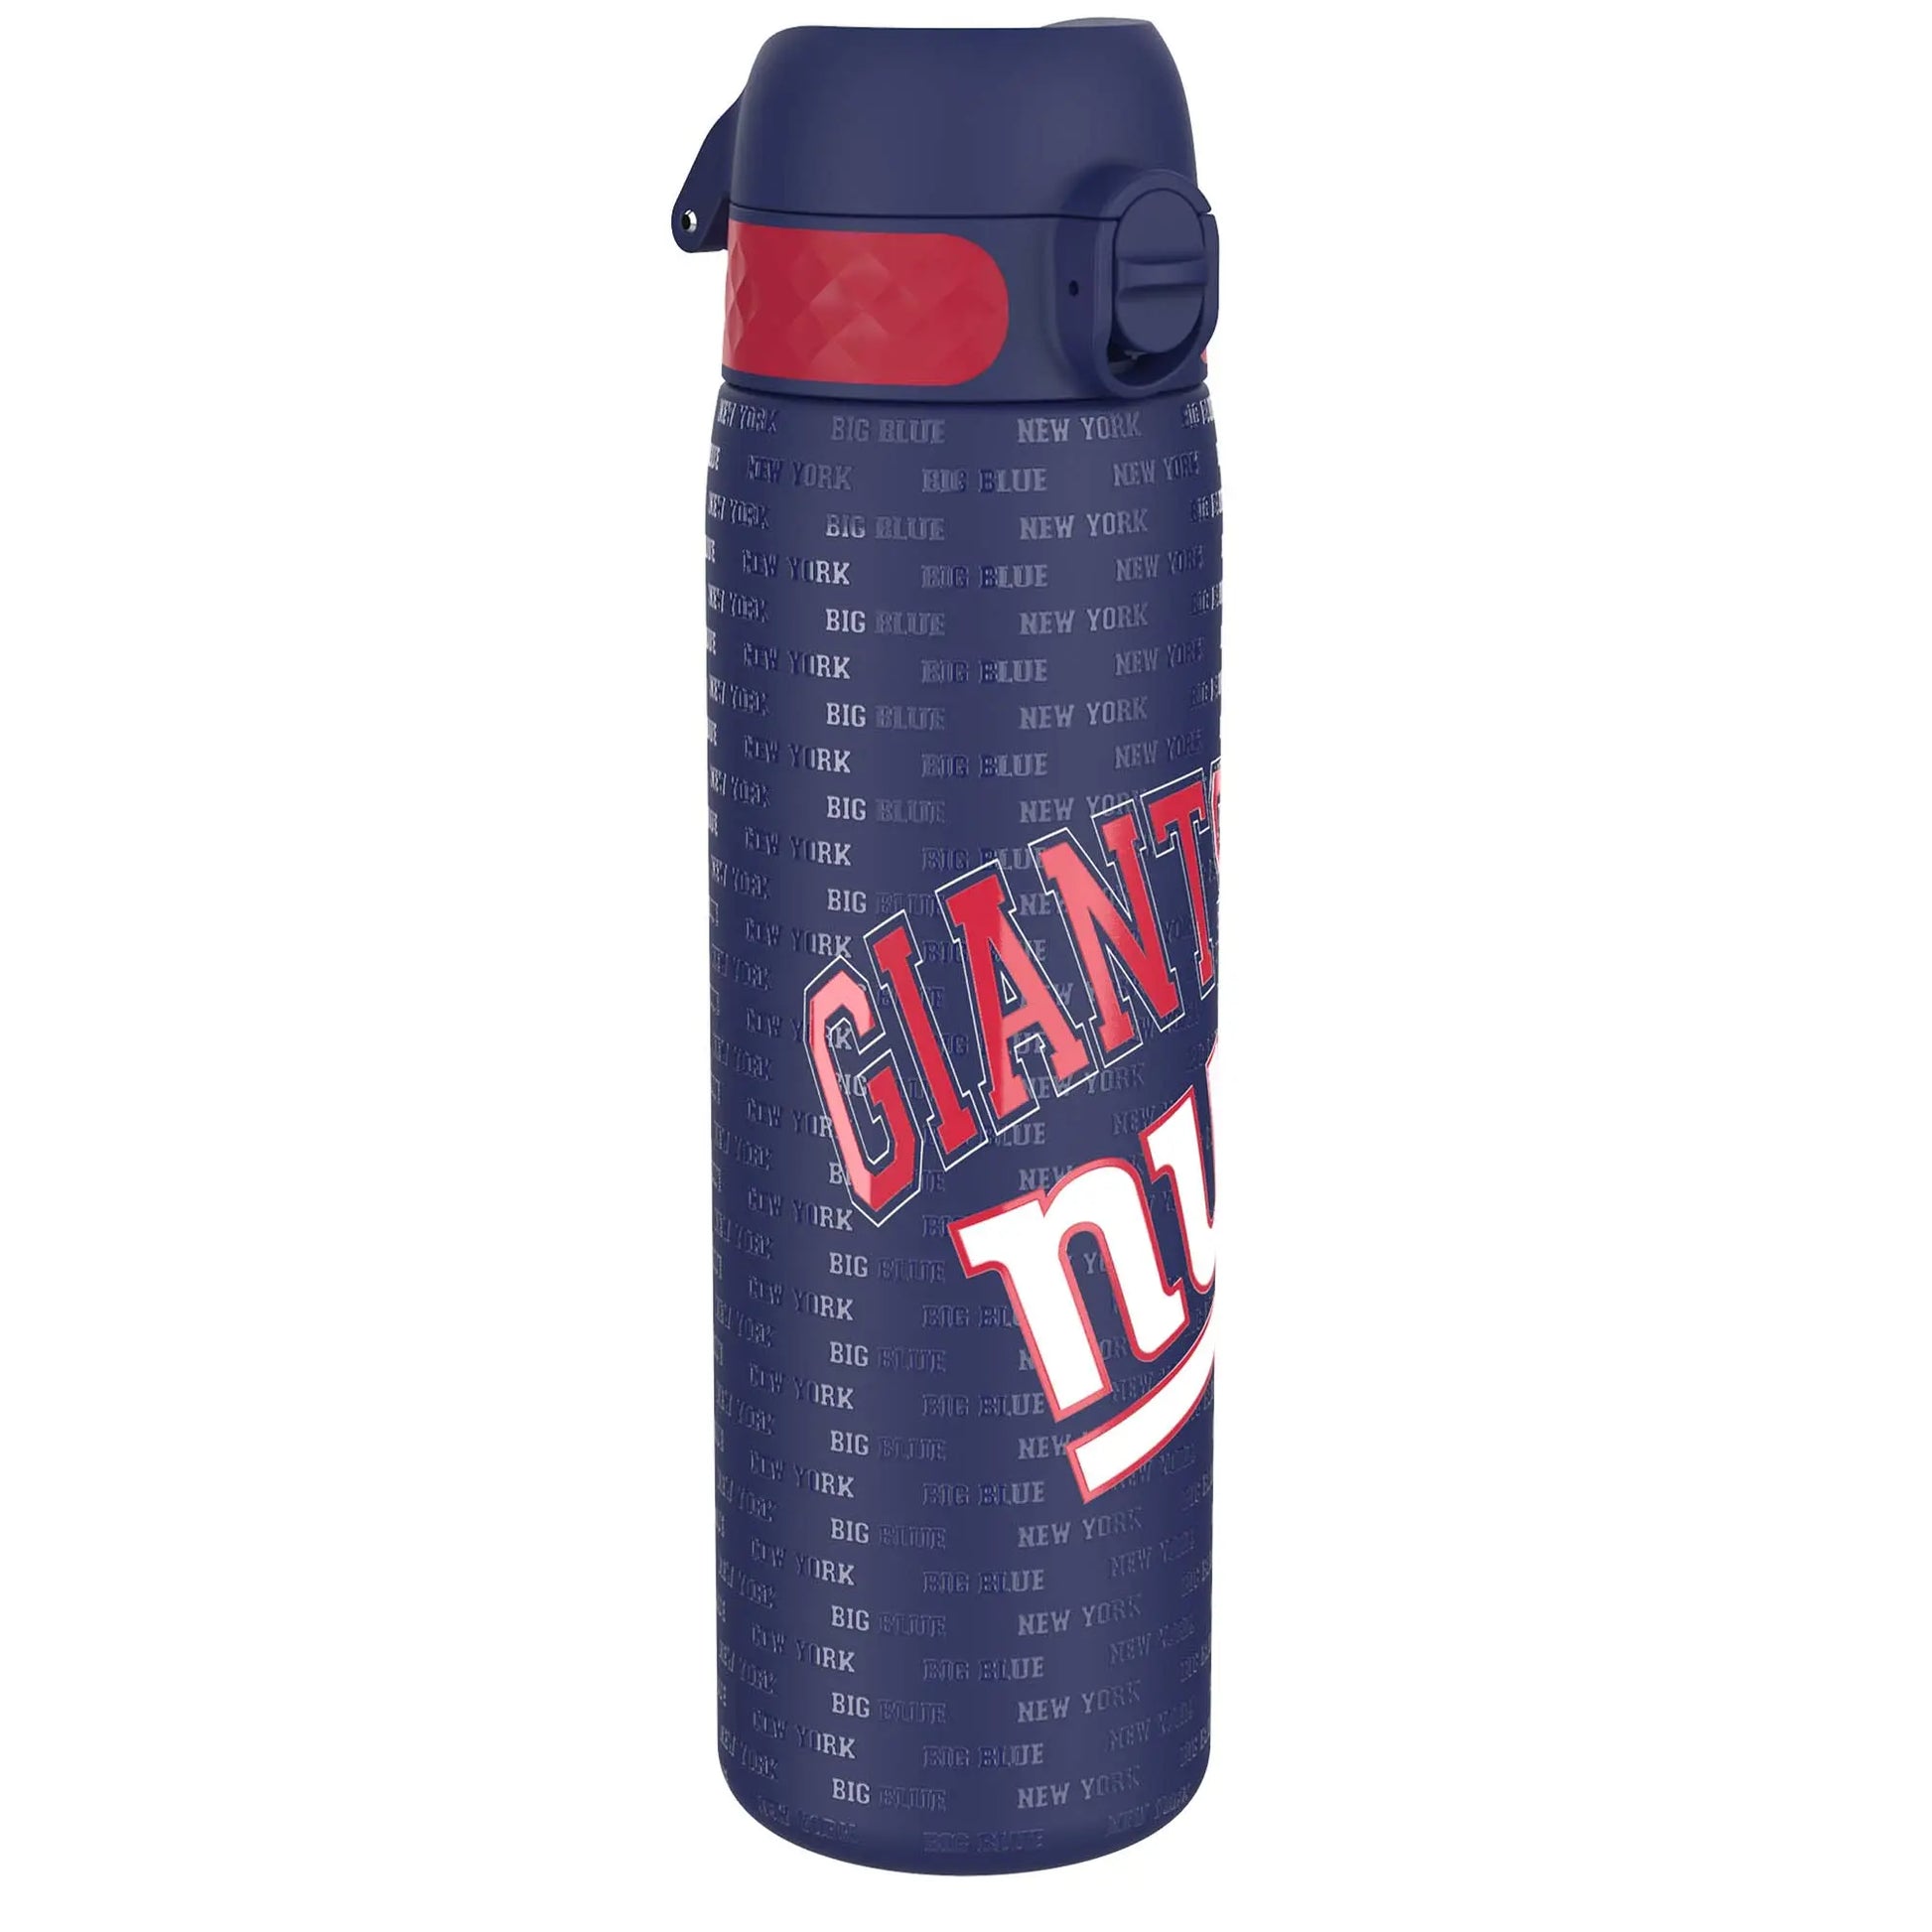 Leak Proof Slim Water Bottle, Stainless Steel, NFL Giants, 600ml (20oz) - ION8